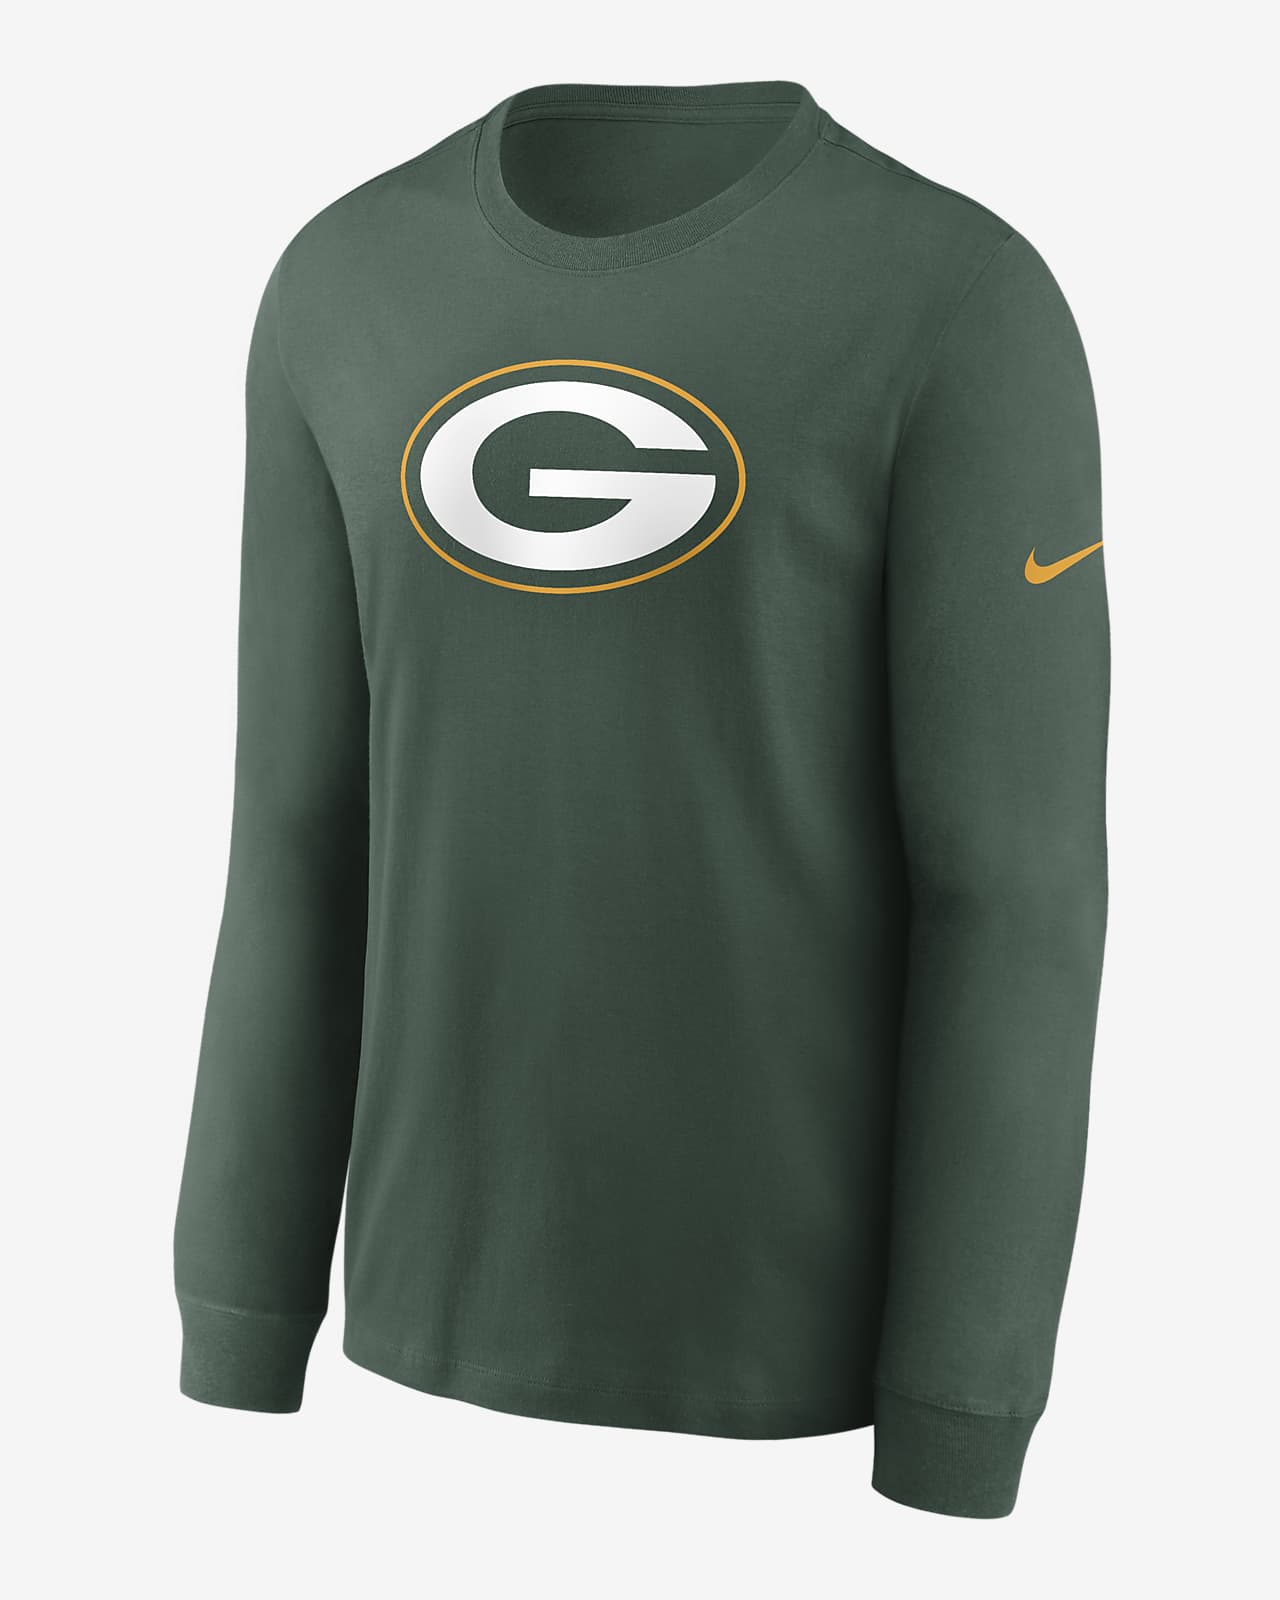 Nike Primary Logo (NFL Green Bay Packers) Men’s Long-Sleeve T-Shirt